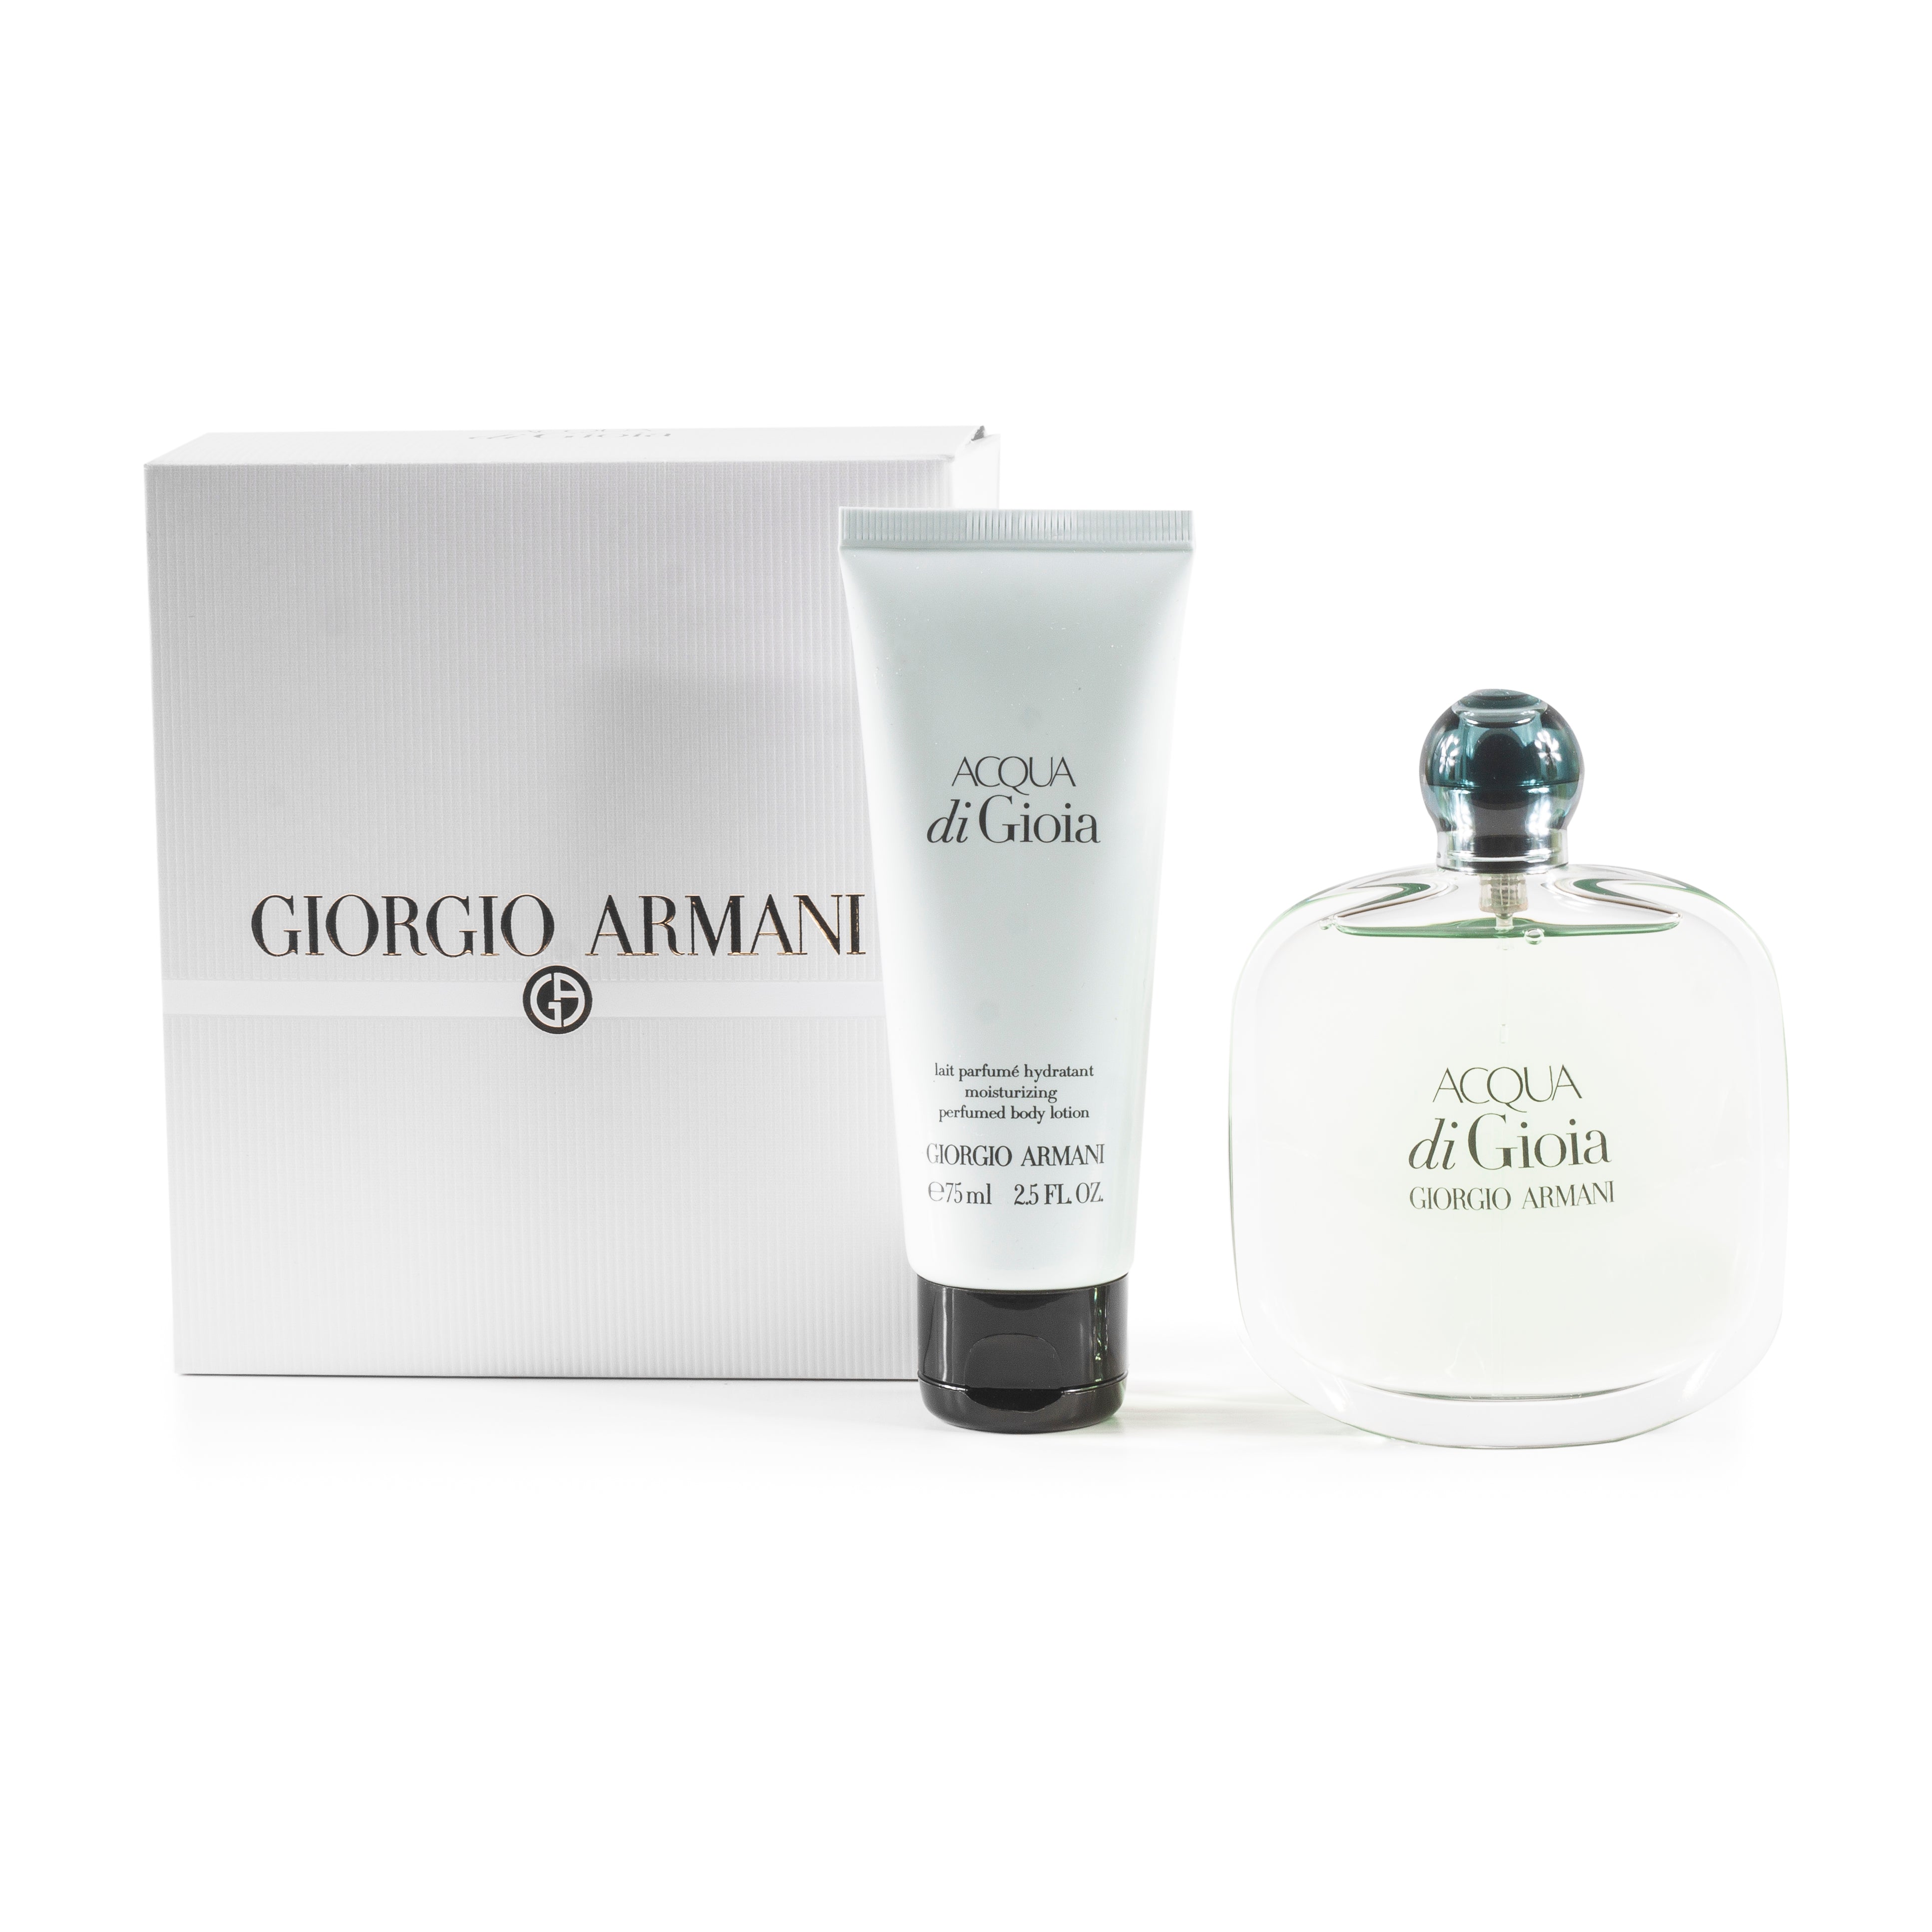 Acqua Gift Set for Women by Giorgio Armani Fragrance